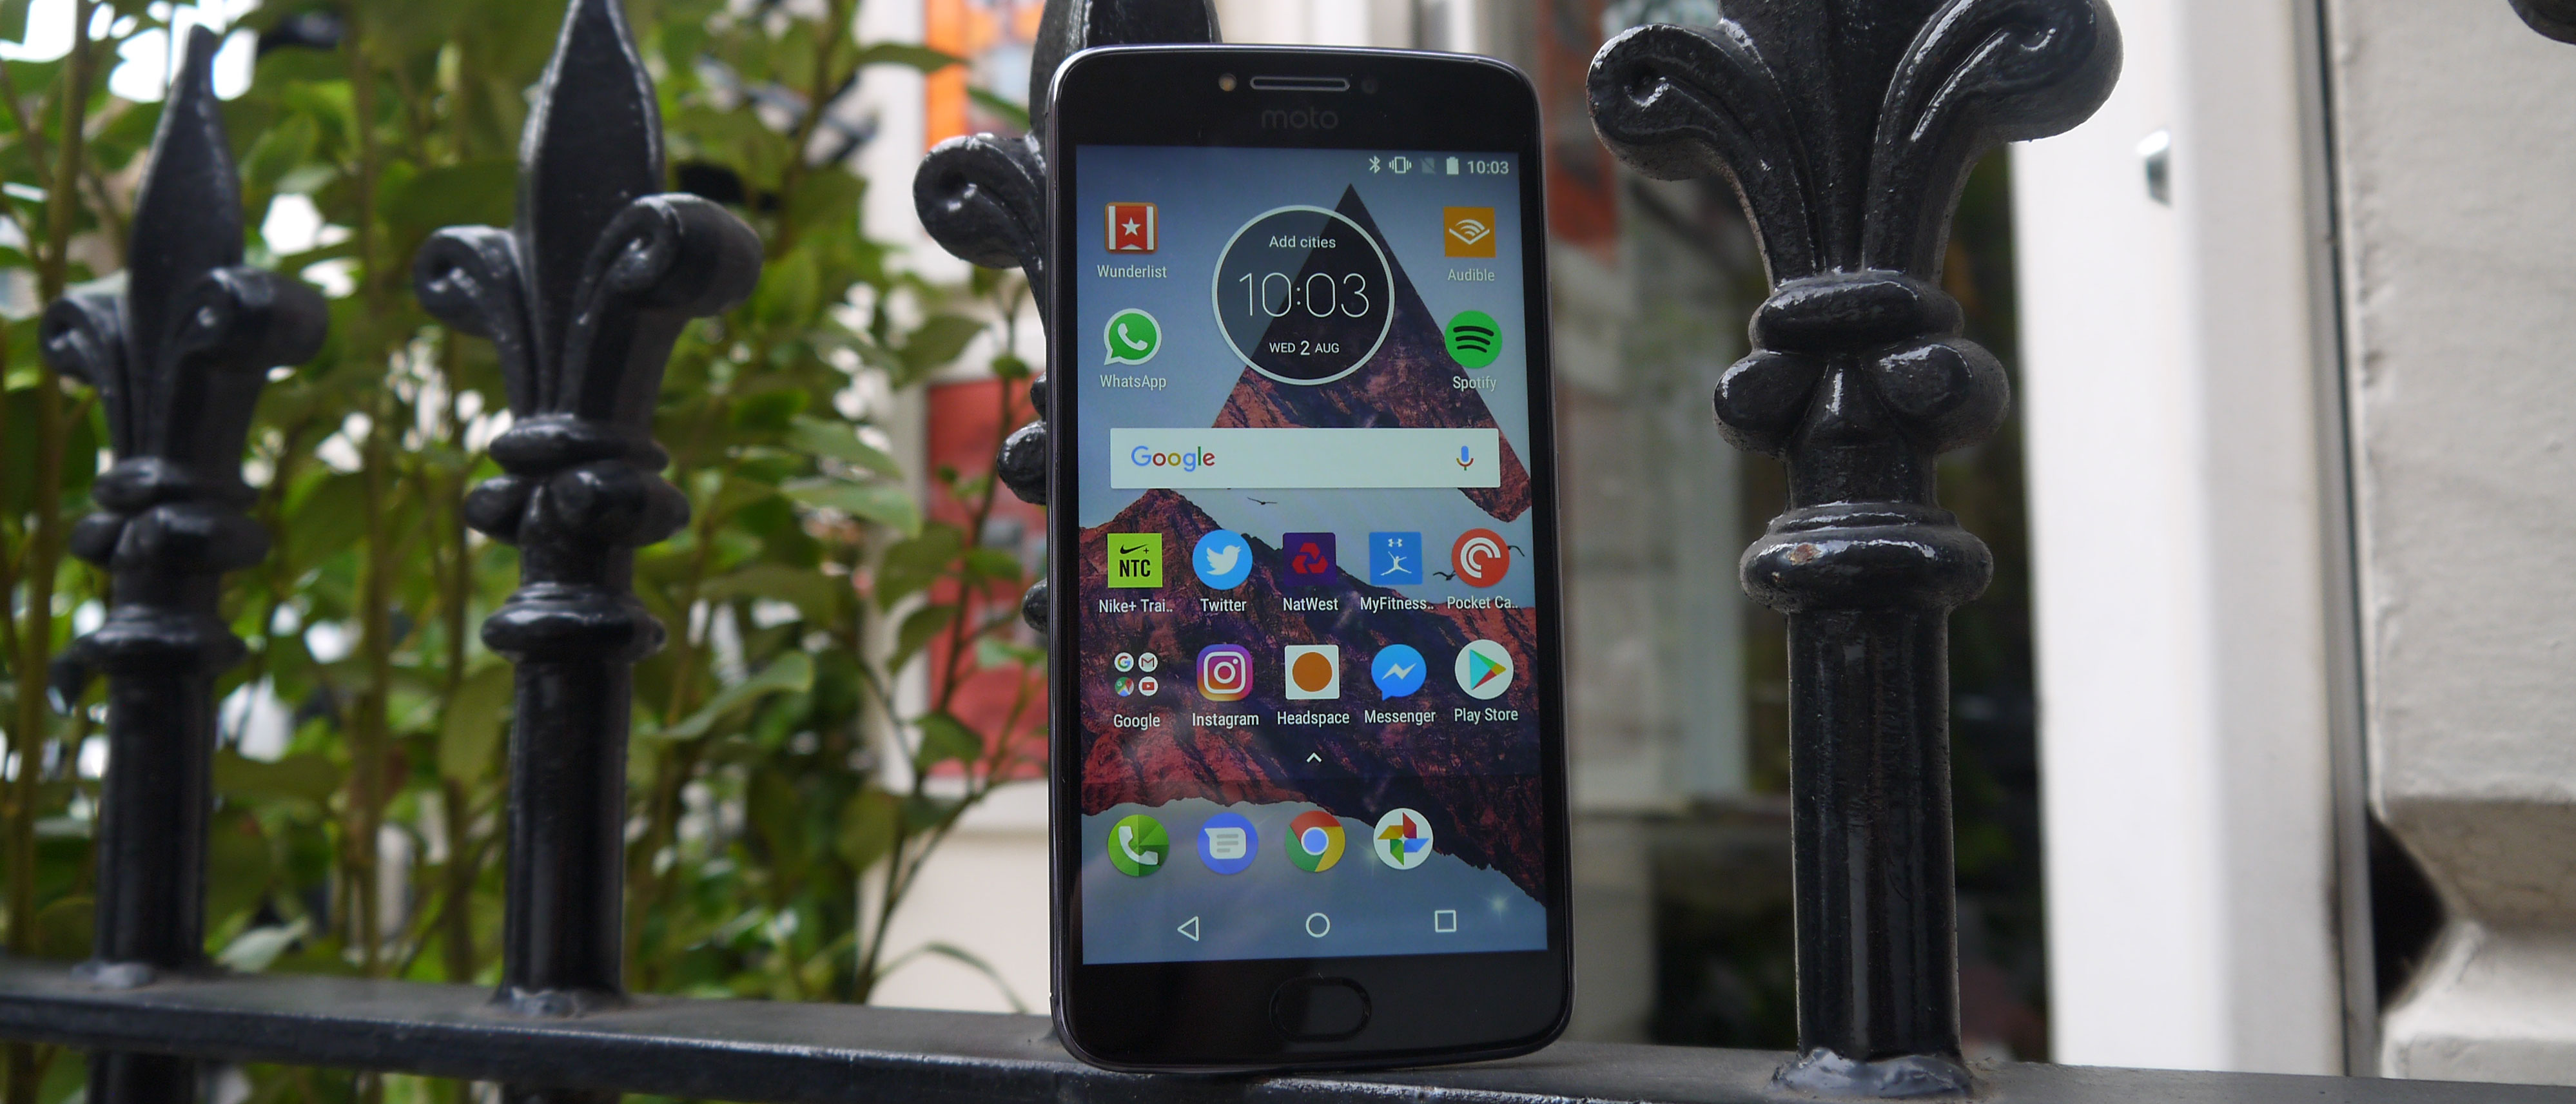 Motorola Moto E4 Plus review: a utilitarian workhorse - The Verge